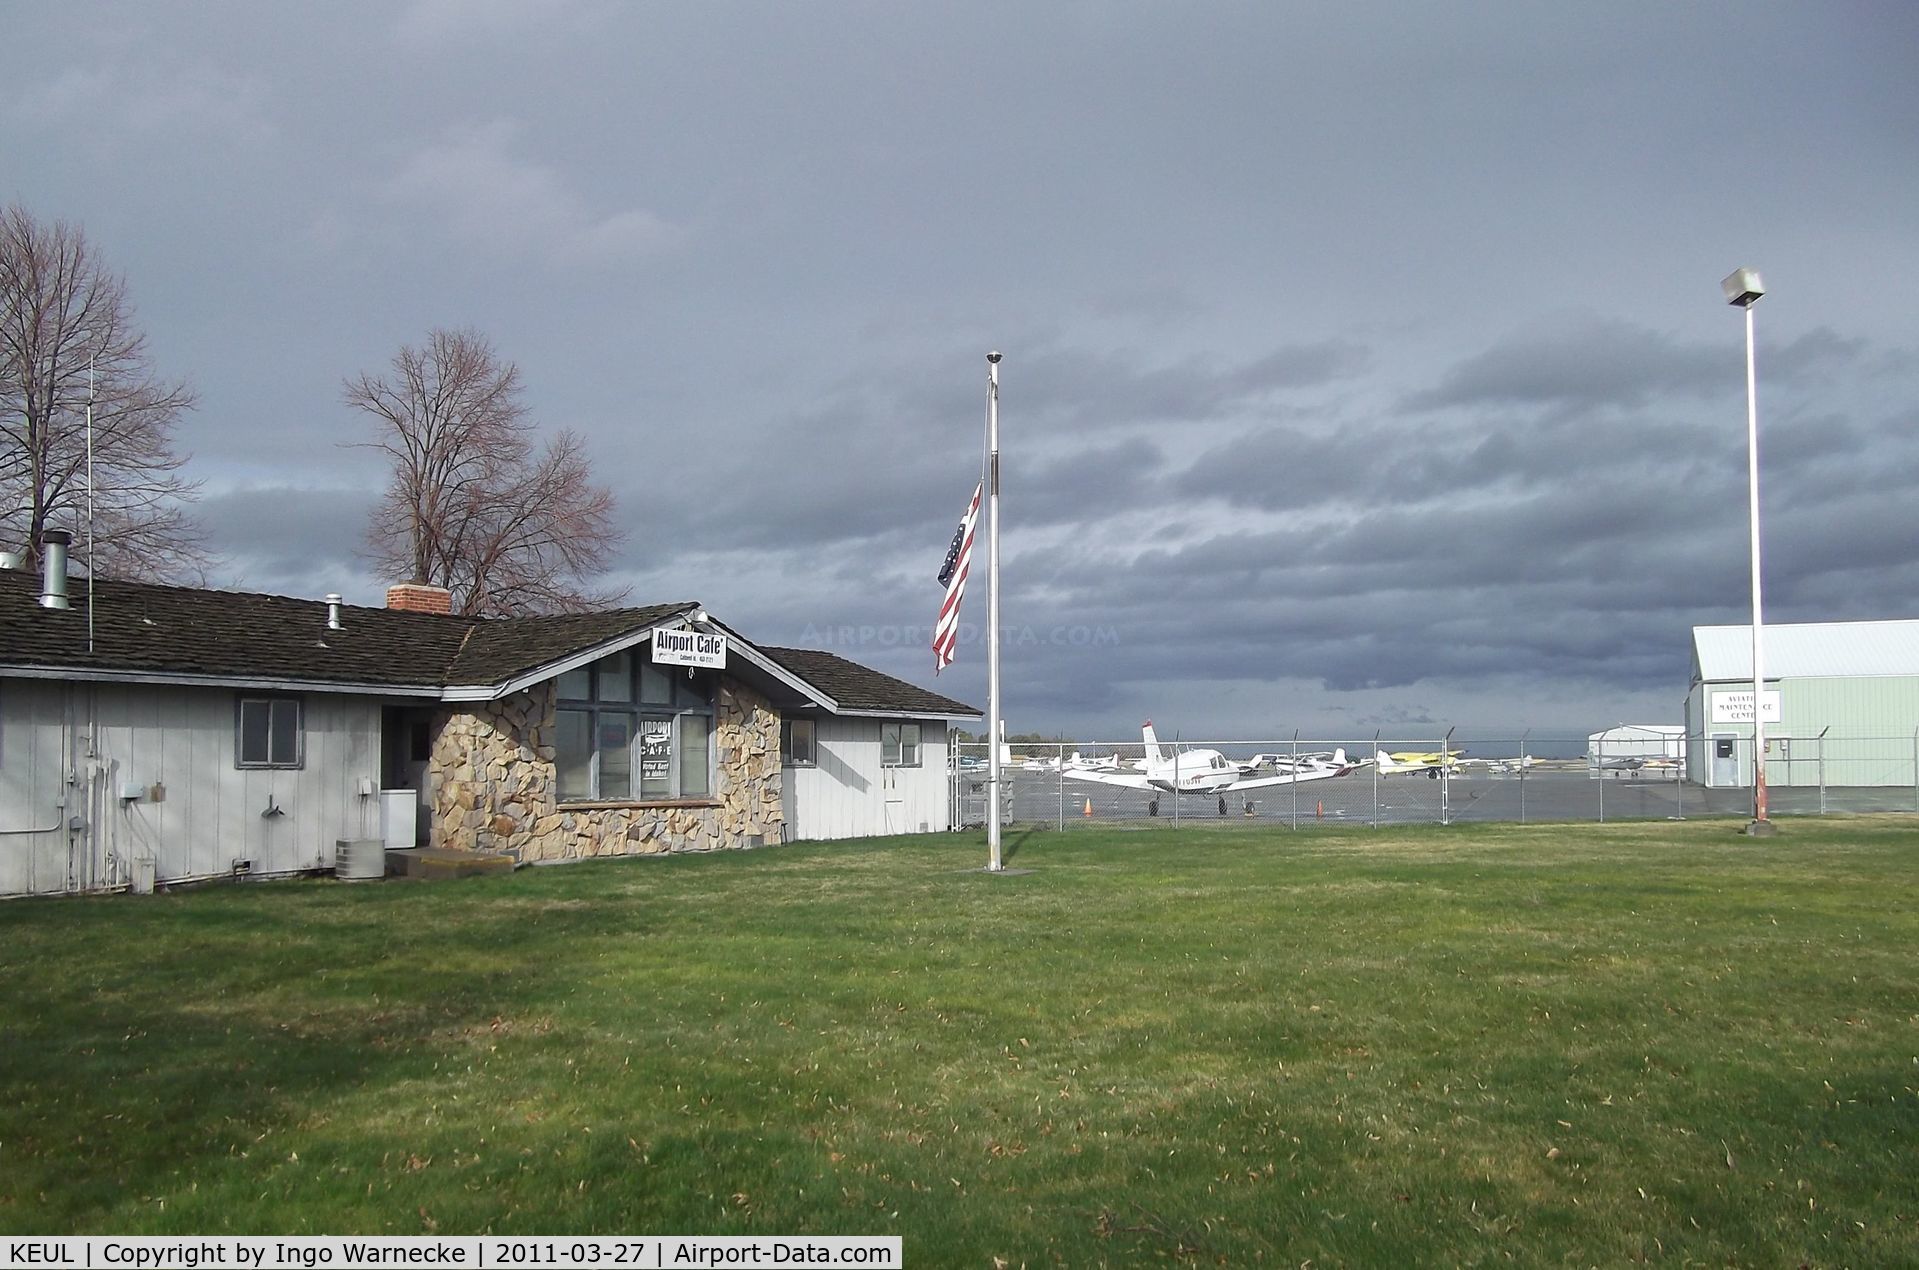 Caldwell Industrial Airport (EUL) - terminal building and apron at Caldwell Industrial Airport